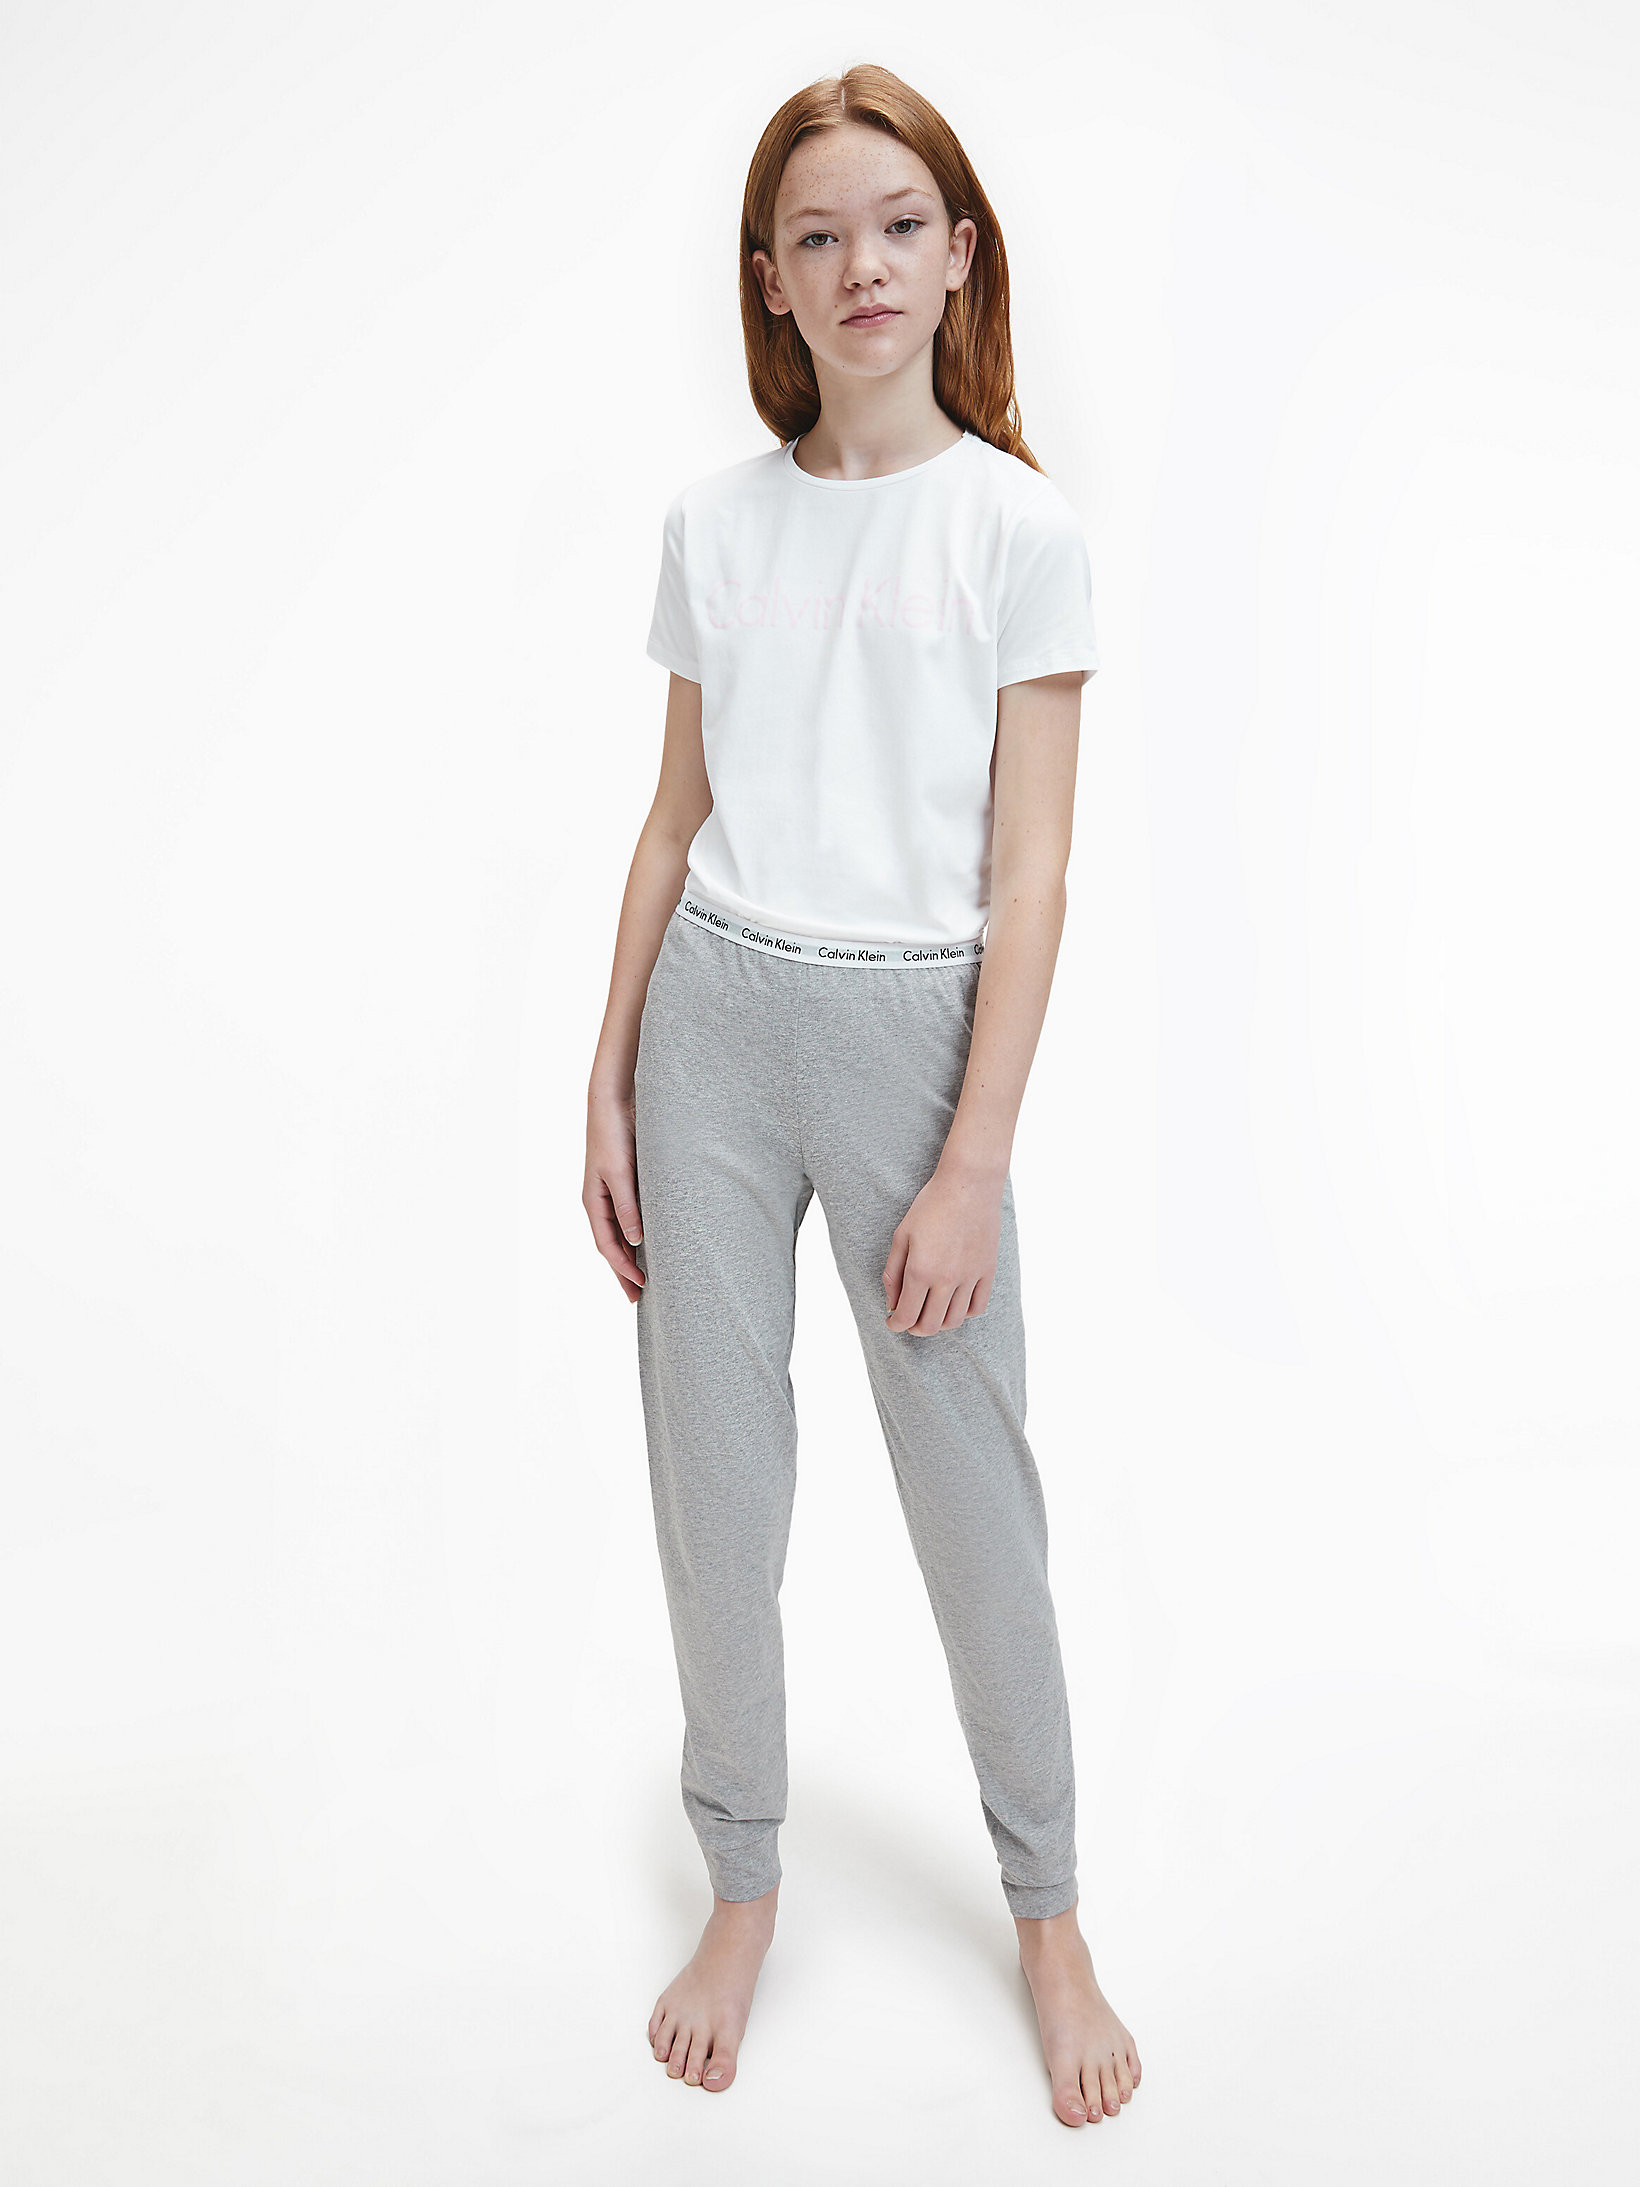 White/grey Htr > Пижама для девочек - Modern Cotton > undefined девочки - Calvin Klein